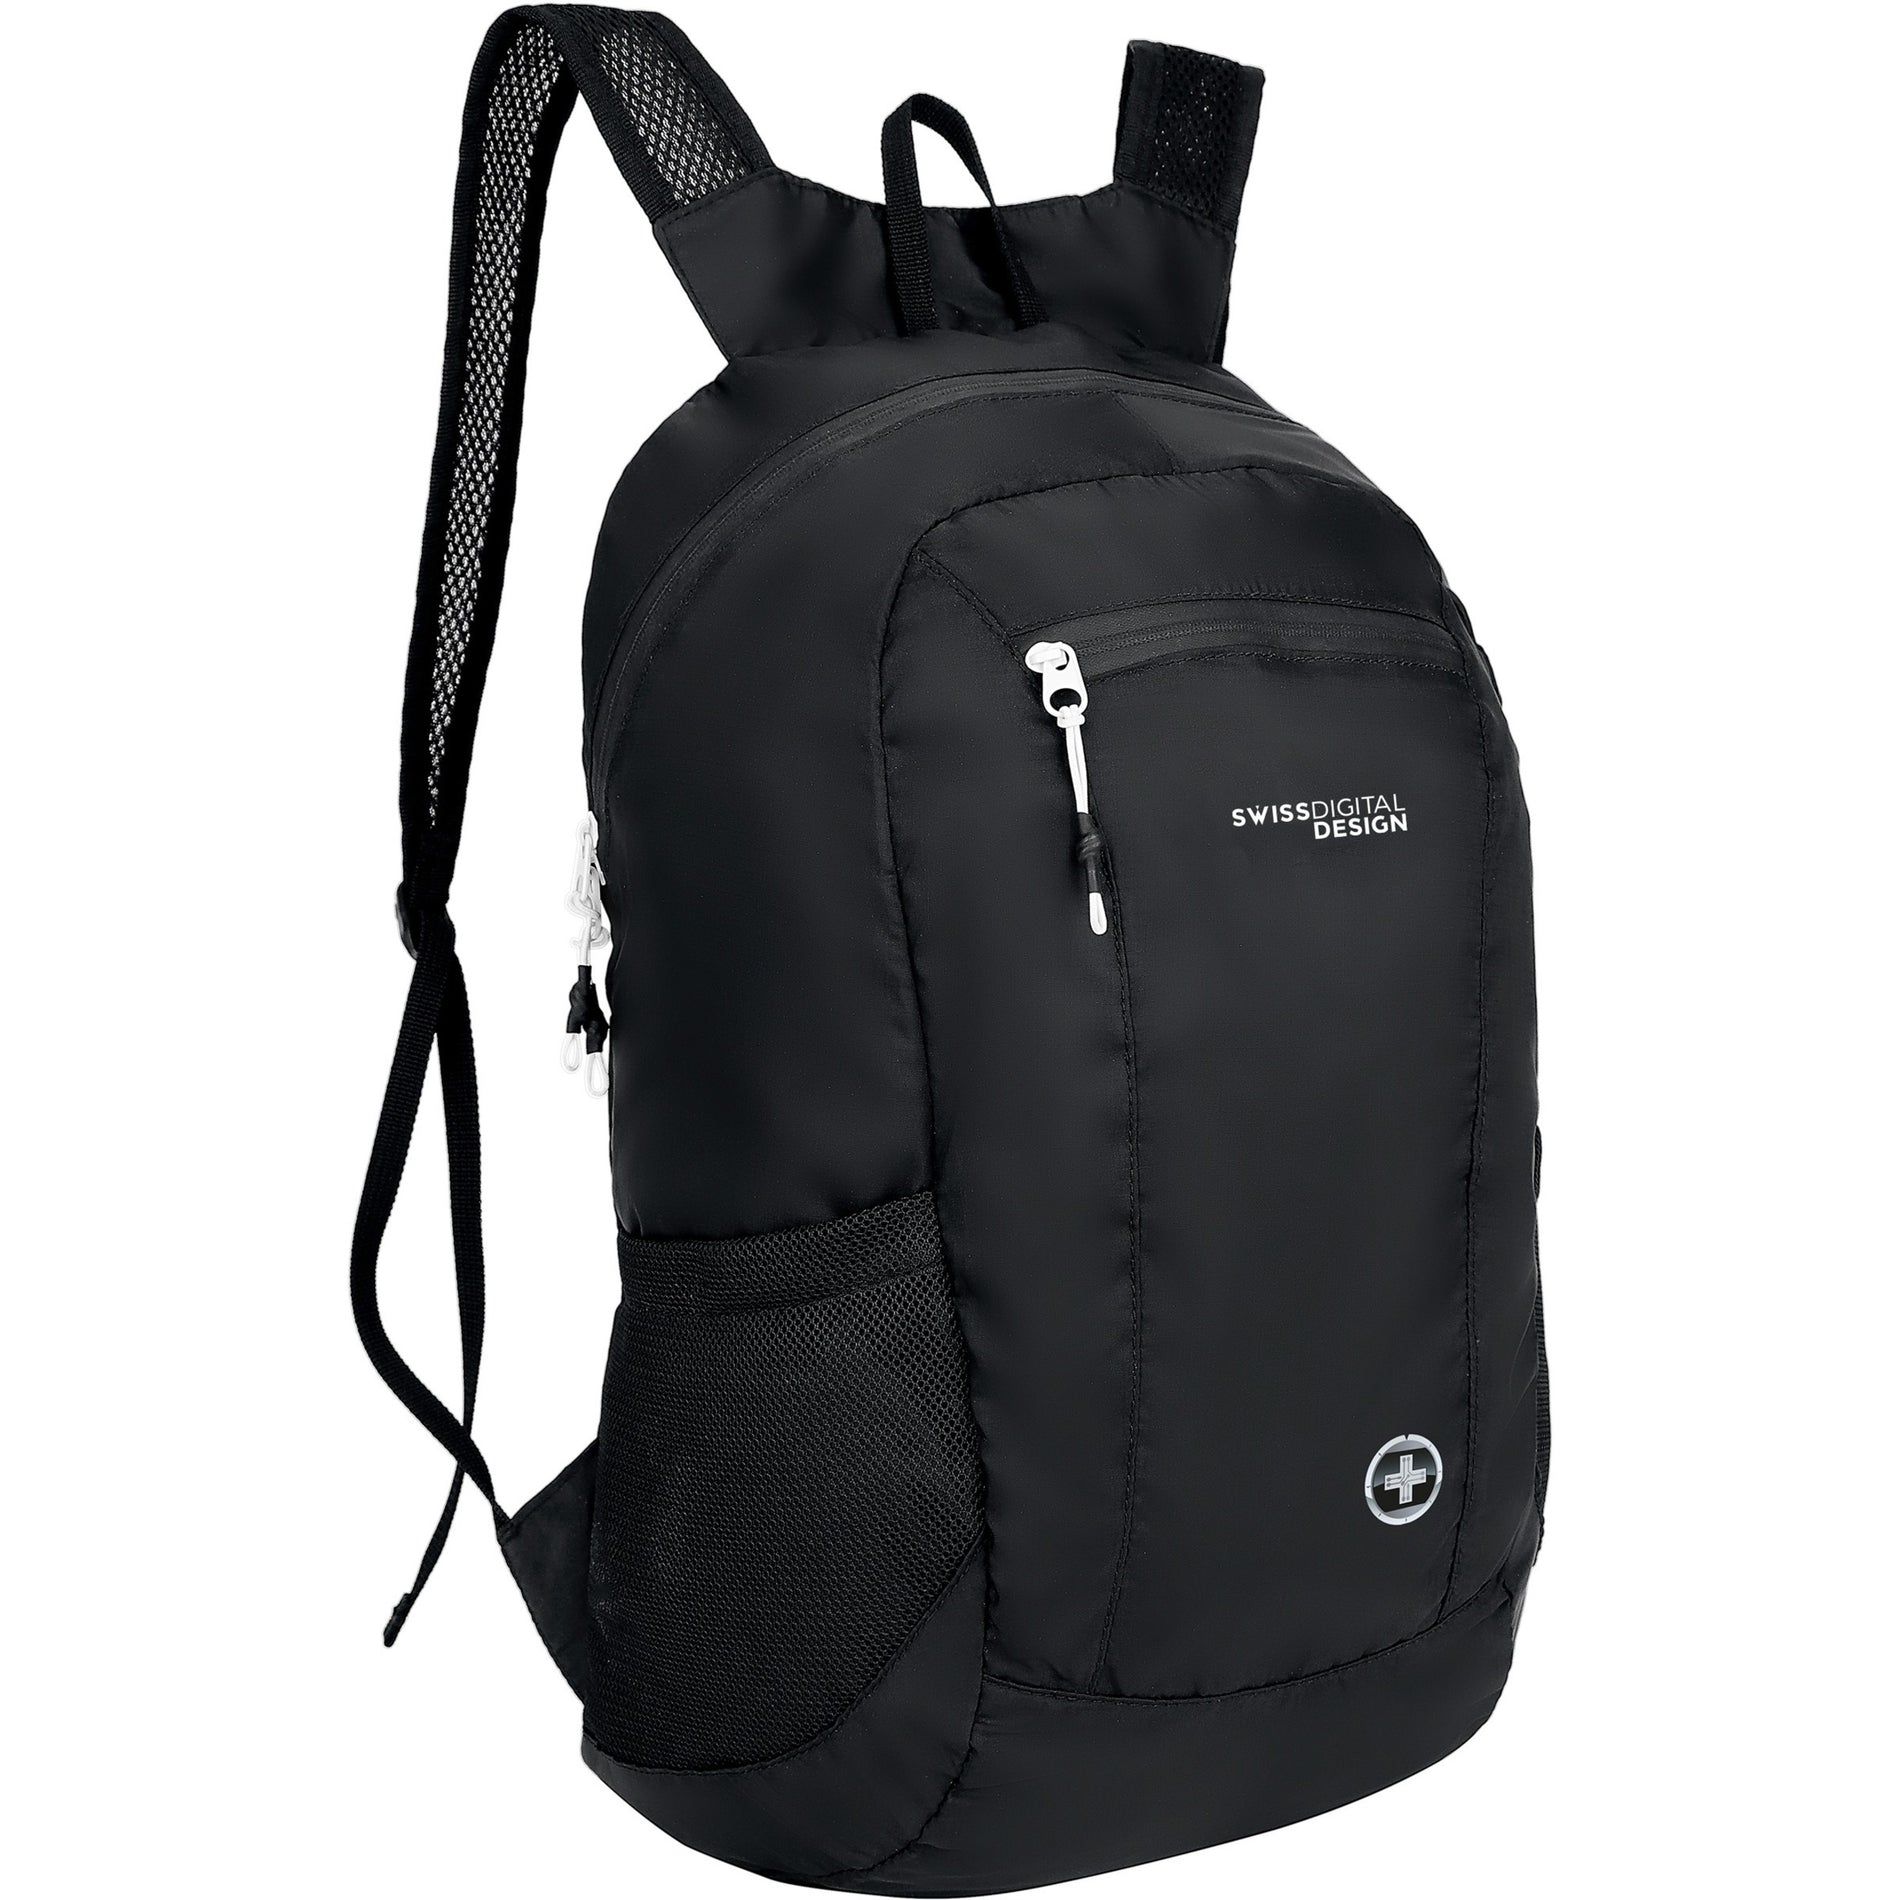 Swissdigital Design SD1595-01 Seagull Foldable Backpack, Water-Resistant, Lightweight, Large Capacity